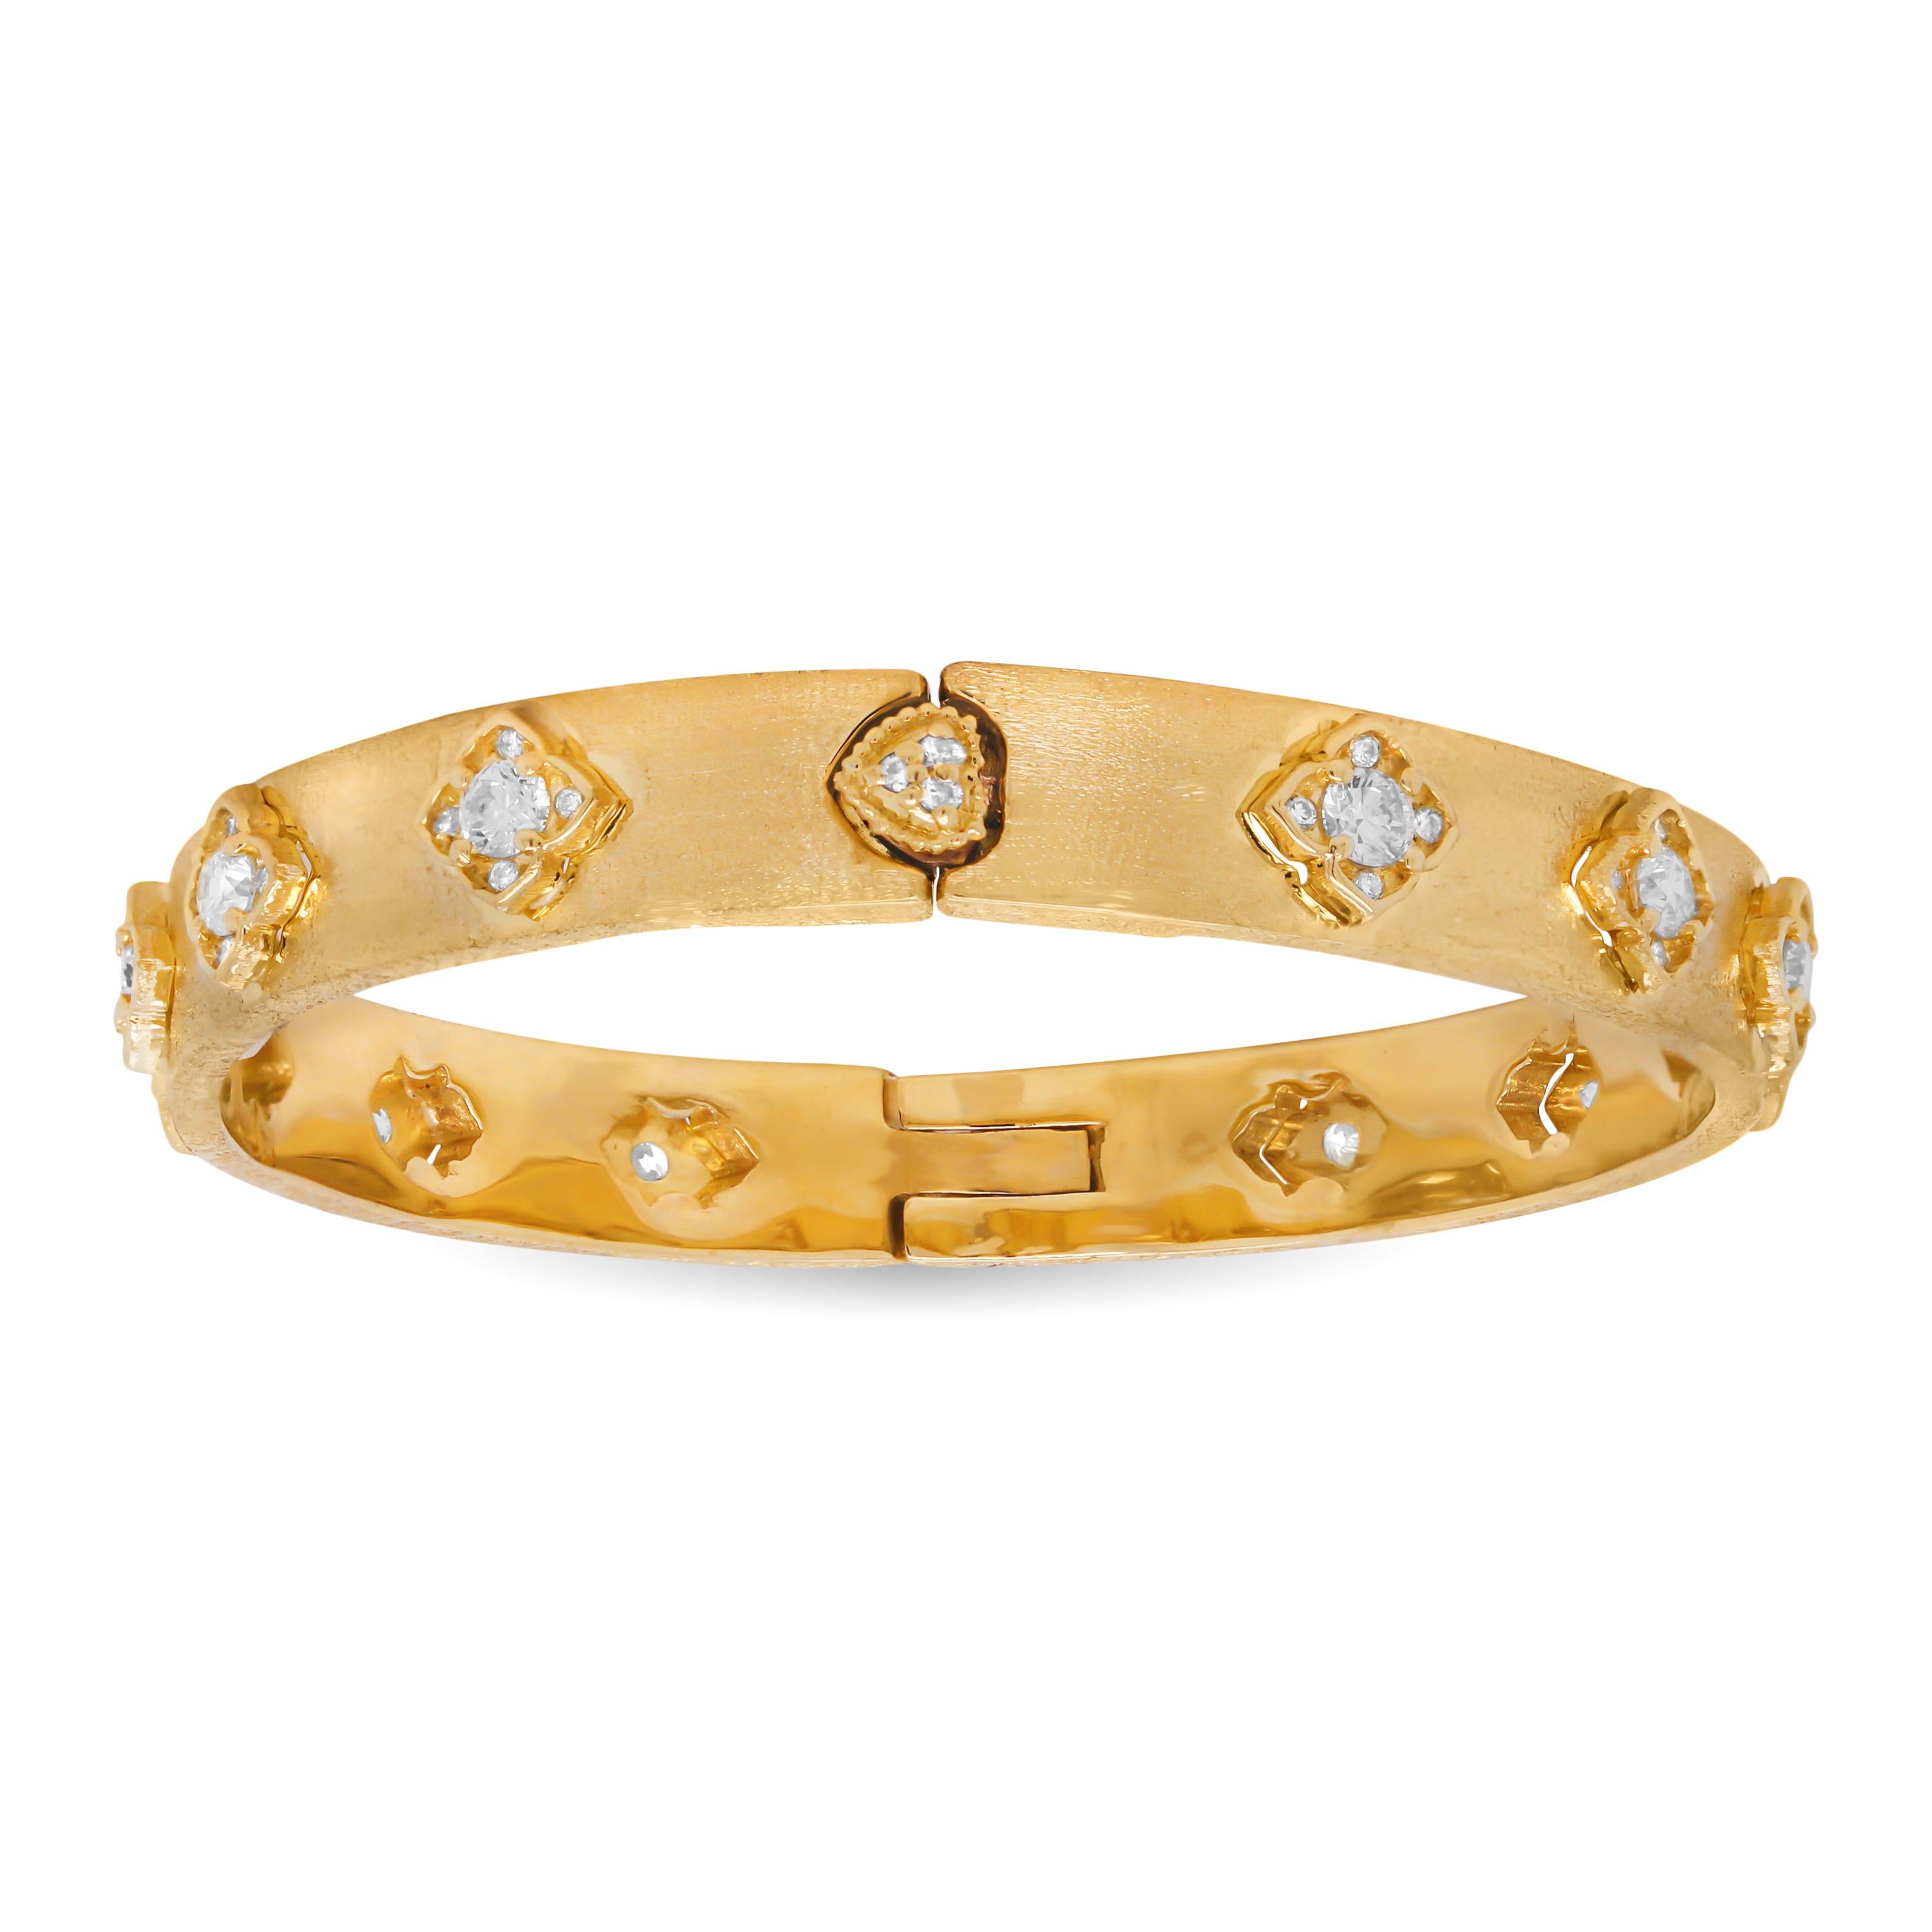 Contemporary Stambolian 18 Karat Yellow Gold and Diamond Floral Bangle Bracelet